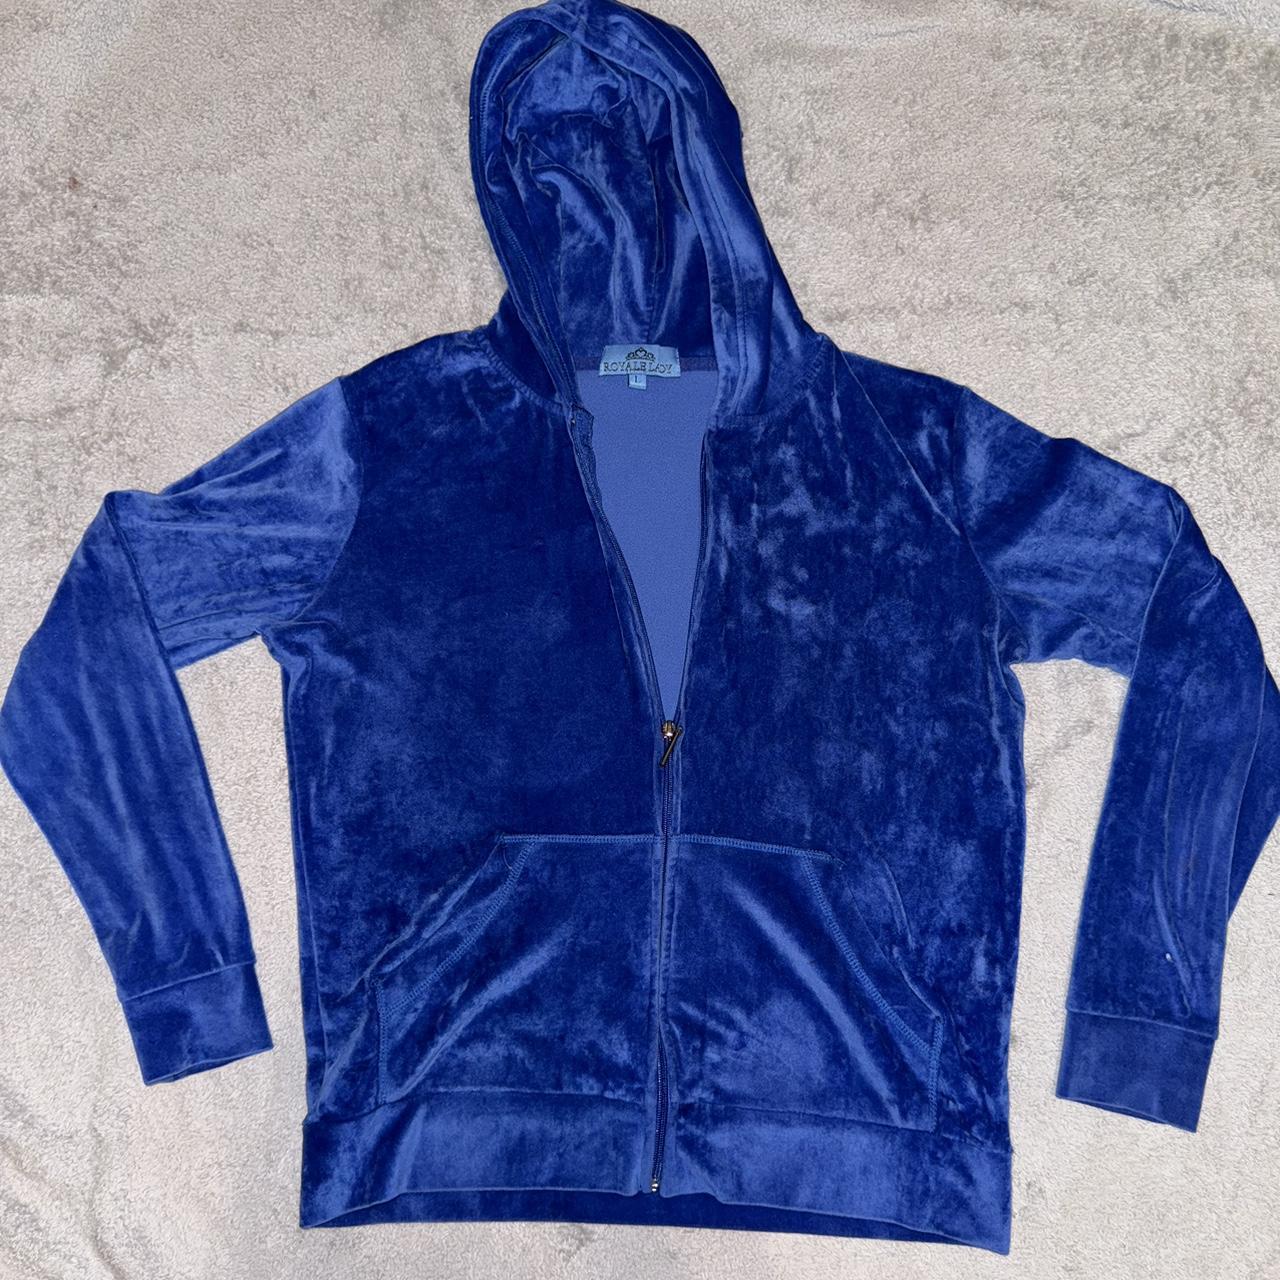 Blue Velour Tracksuit Jacket brand is Royale Lady - Depop